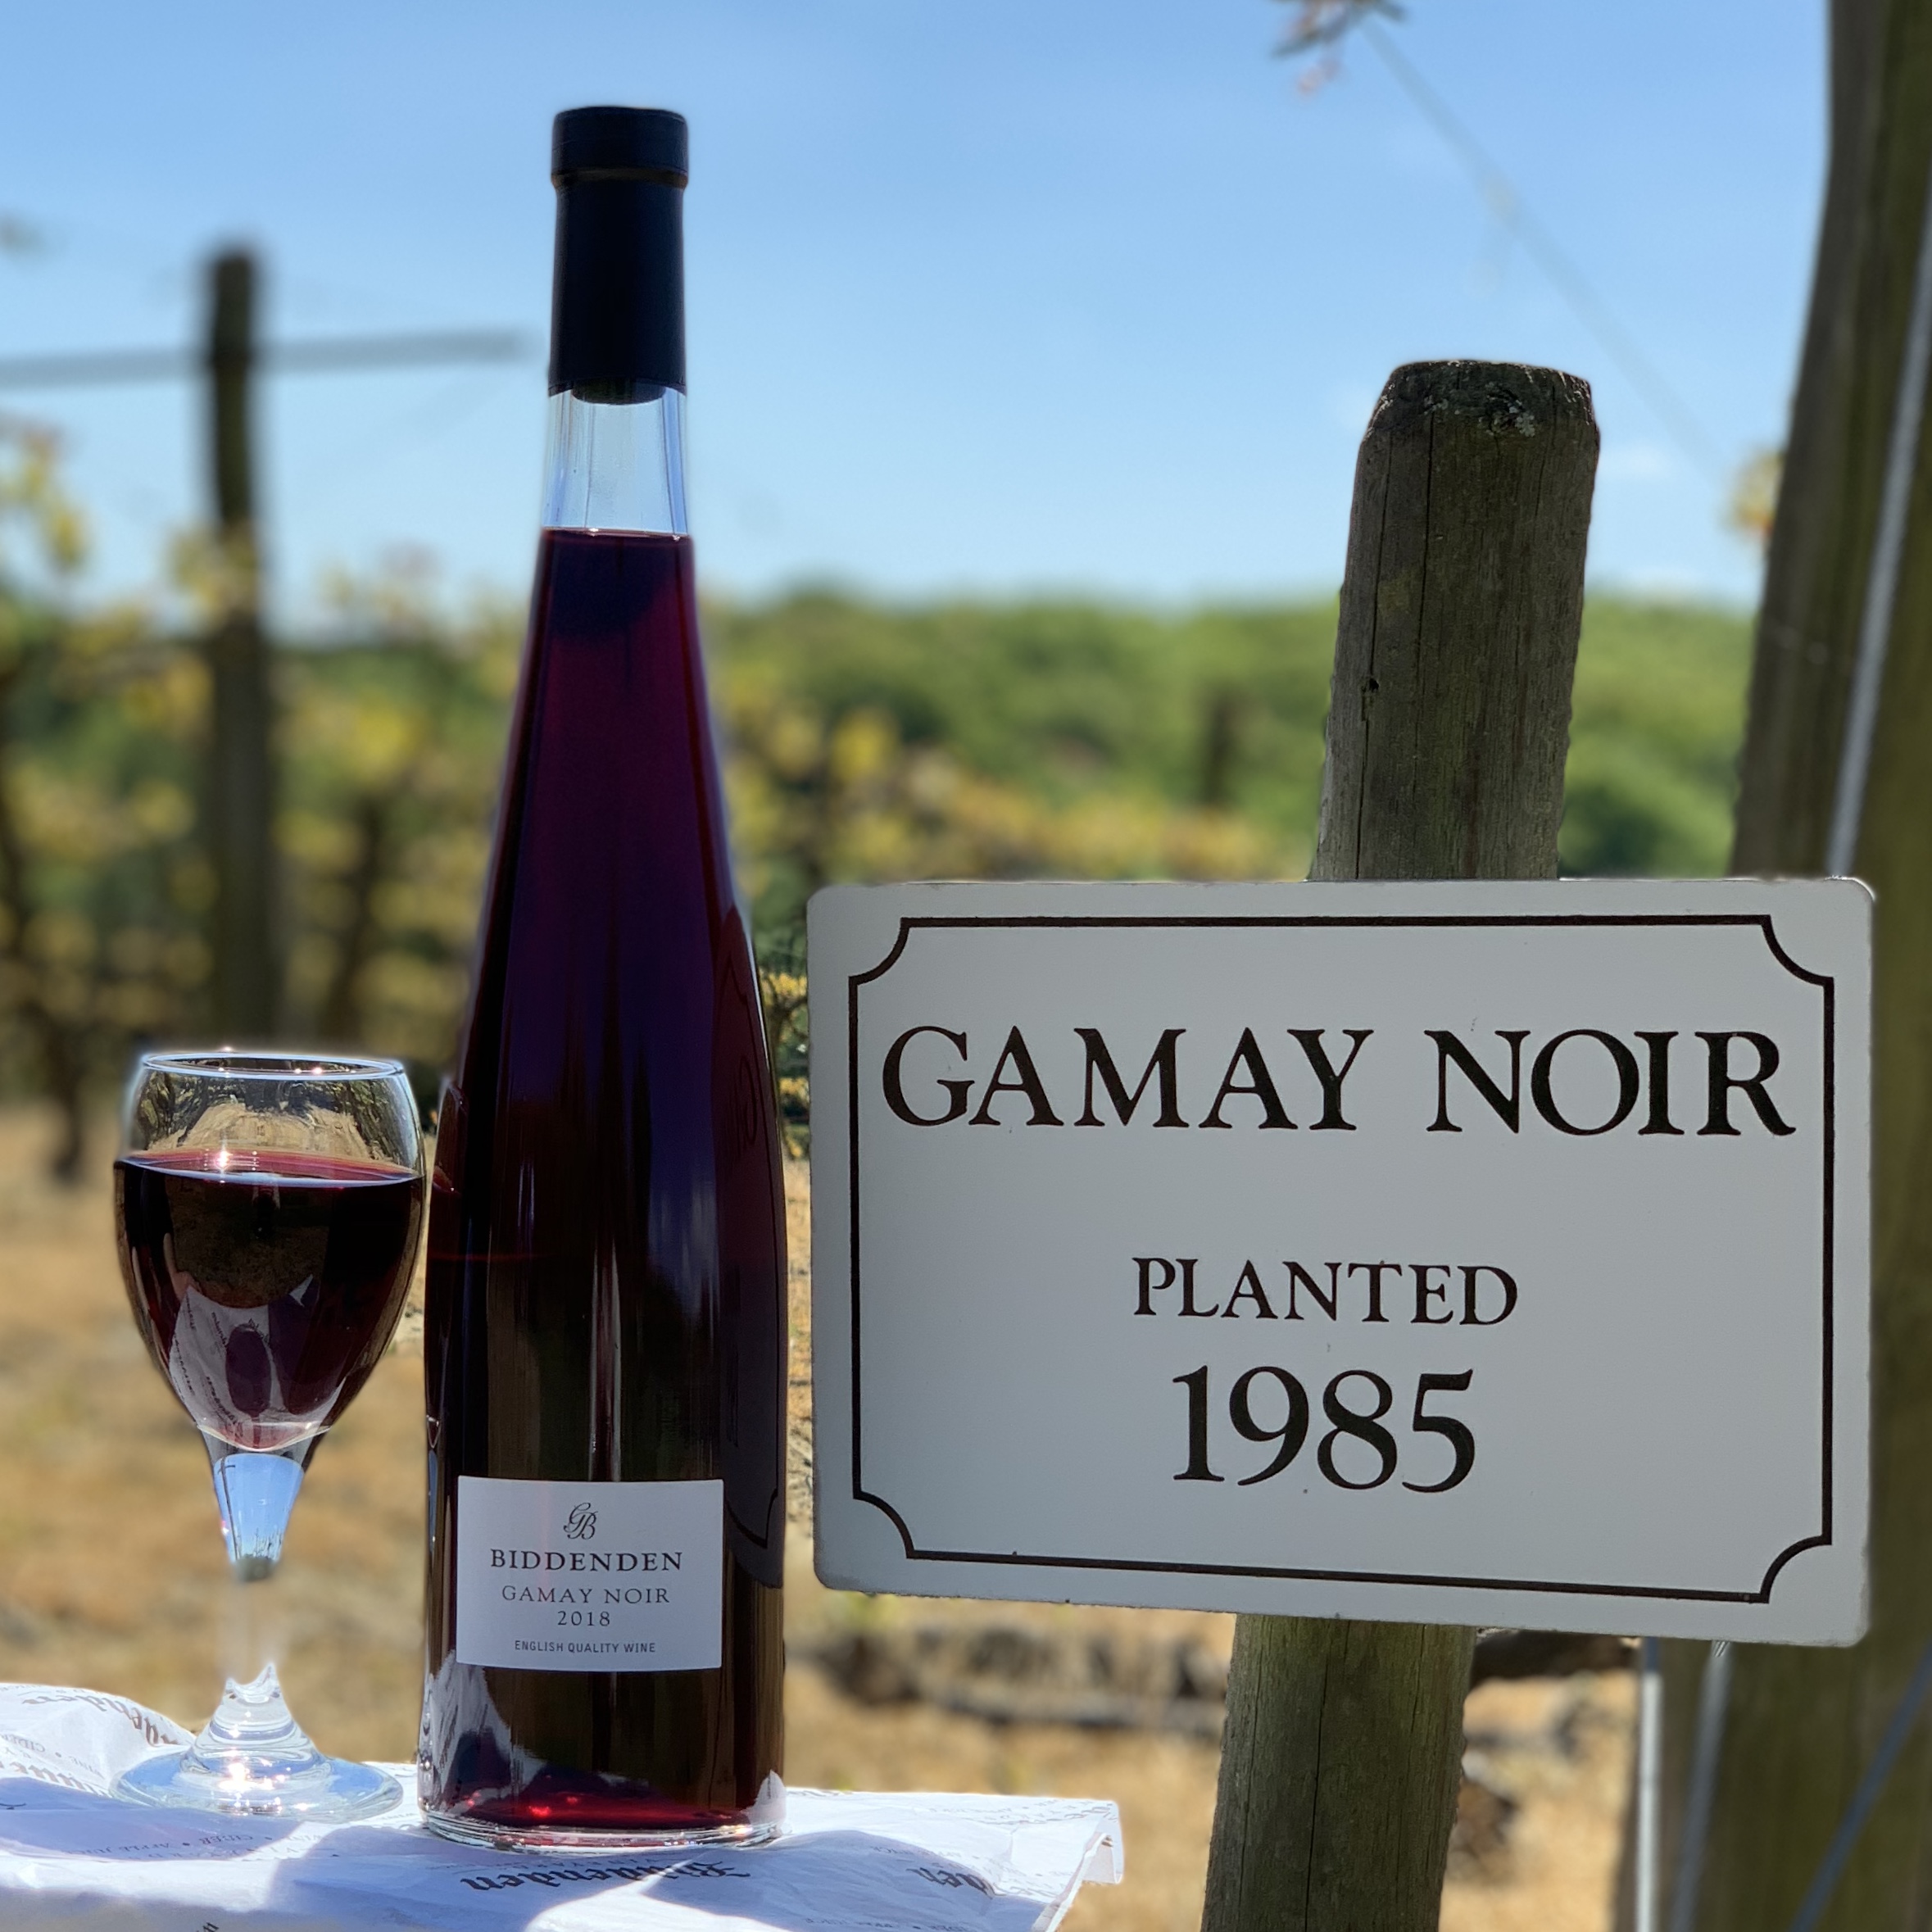 Biddenden Gamay Noir 2018 English wine week 2019 wine of